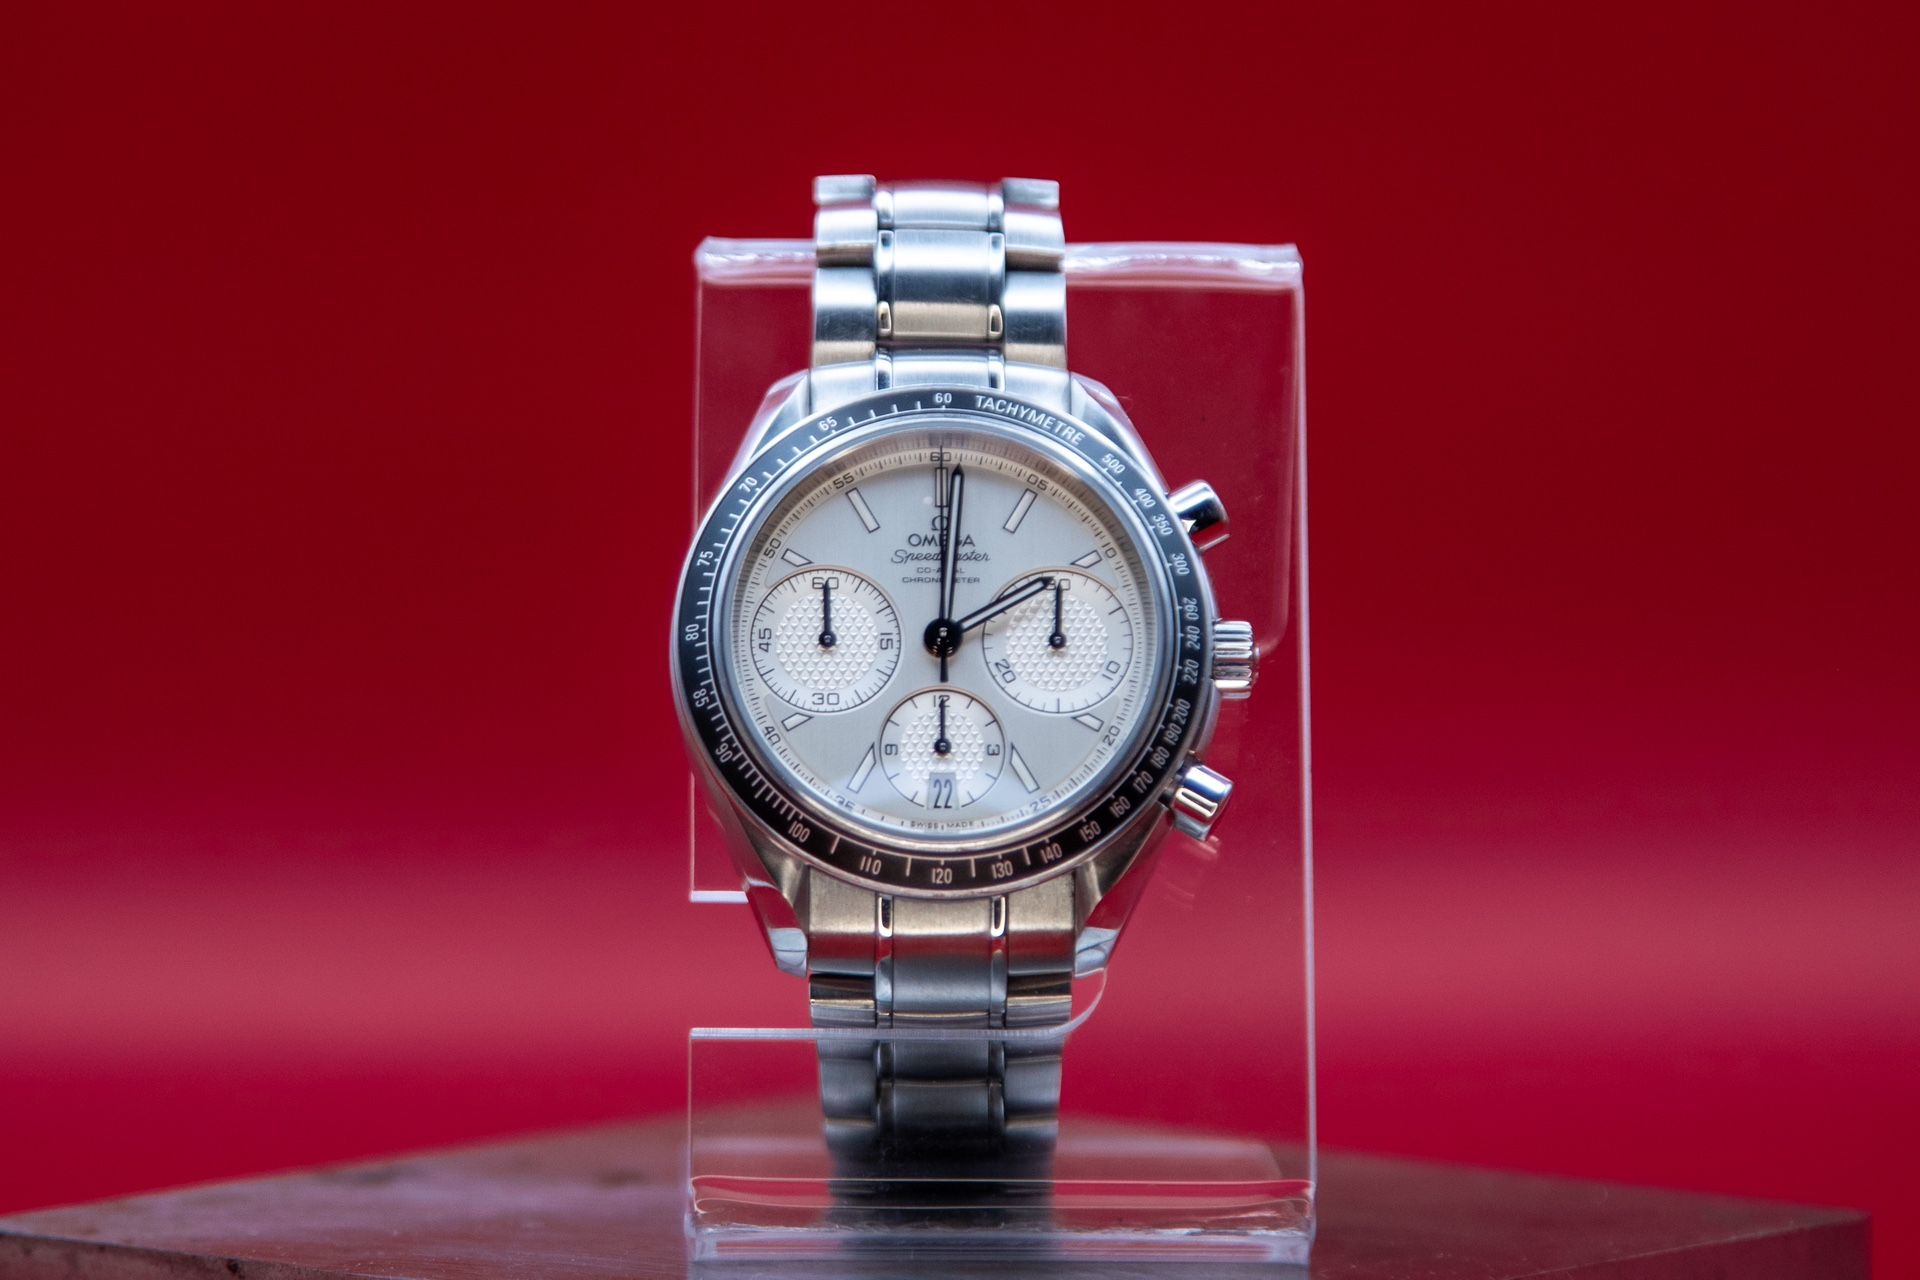 OMEGA Speedmaster Silver Men's Watch - 326.30.40.50.02.001